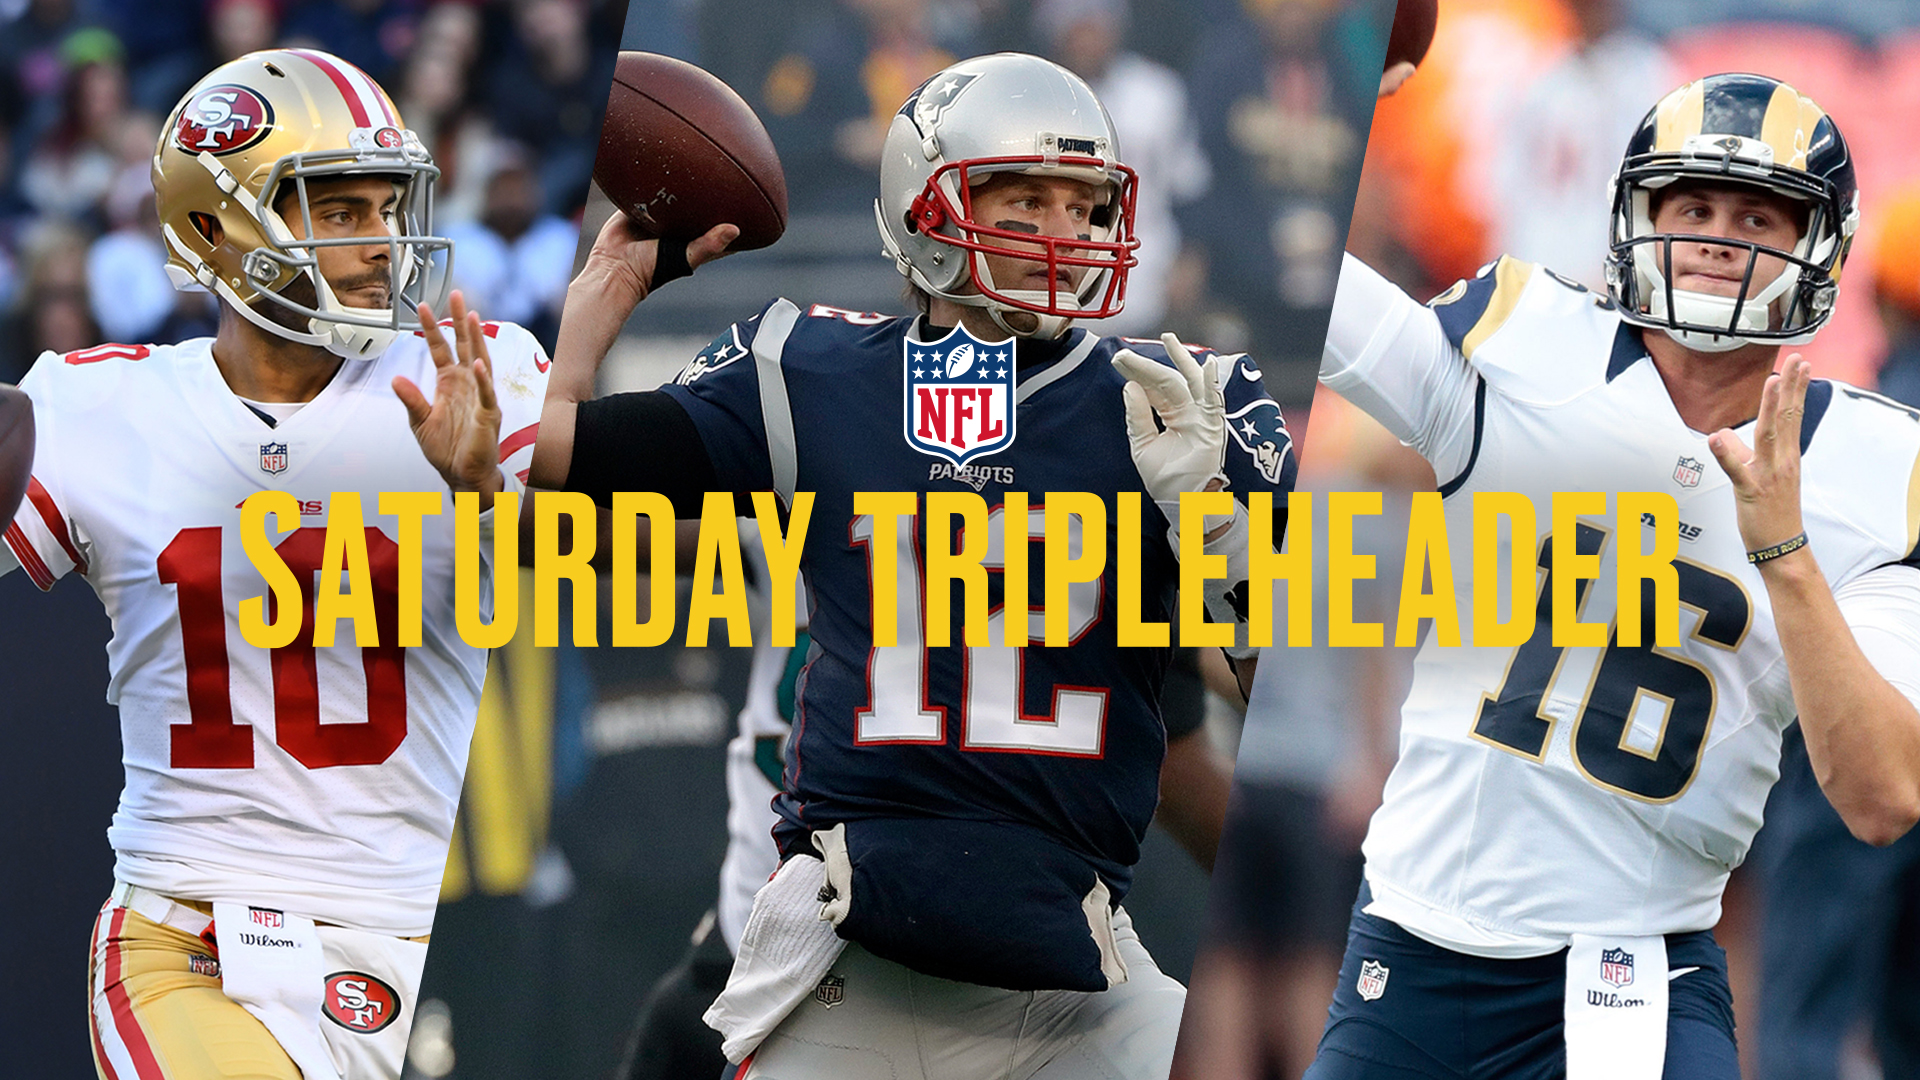 NFL on X: A Saturday tripleheader on @nflnetwork! 